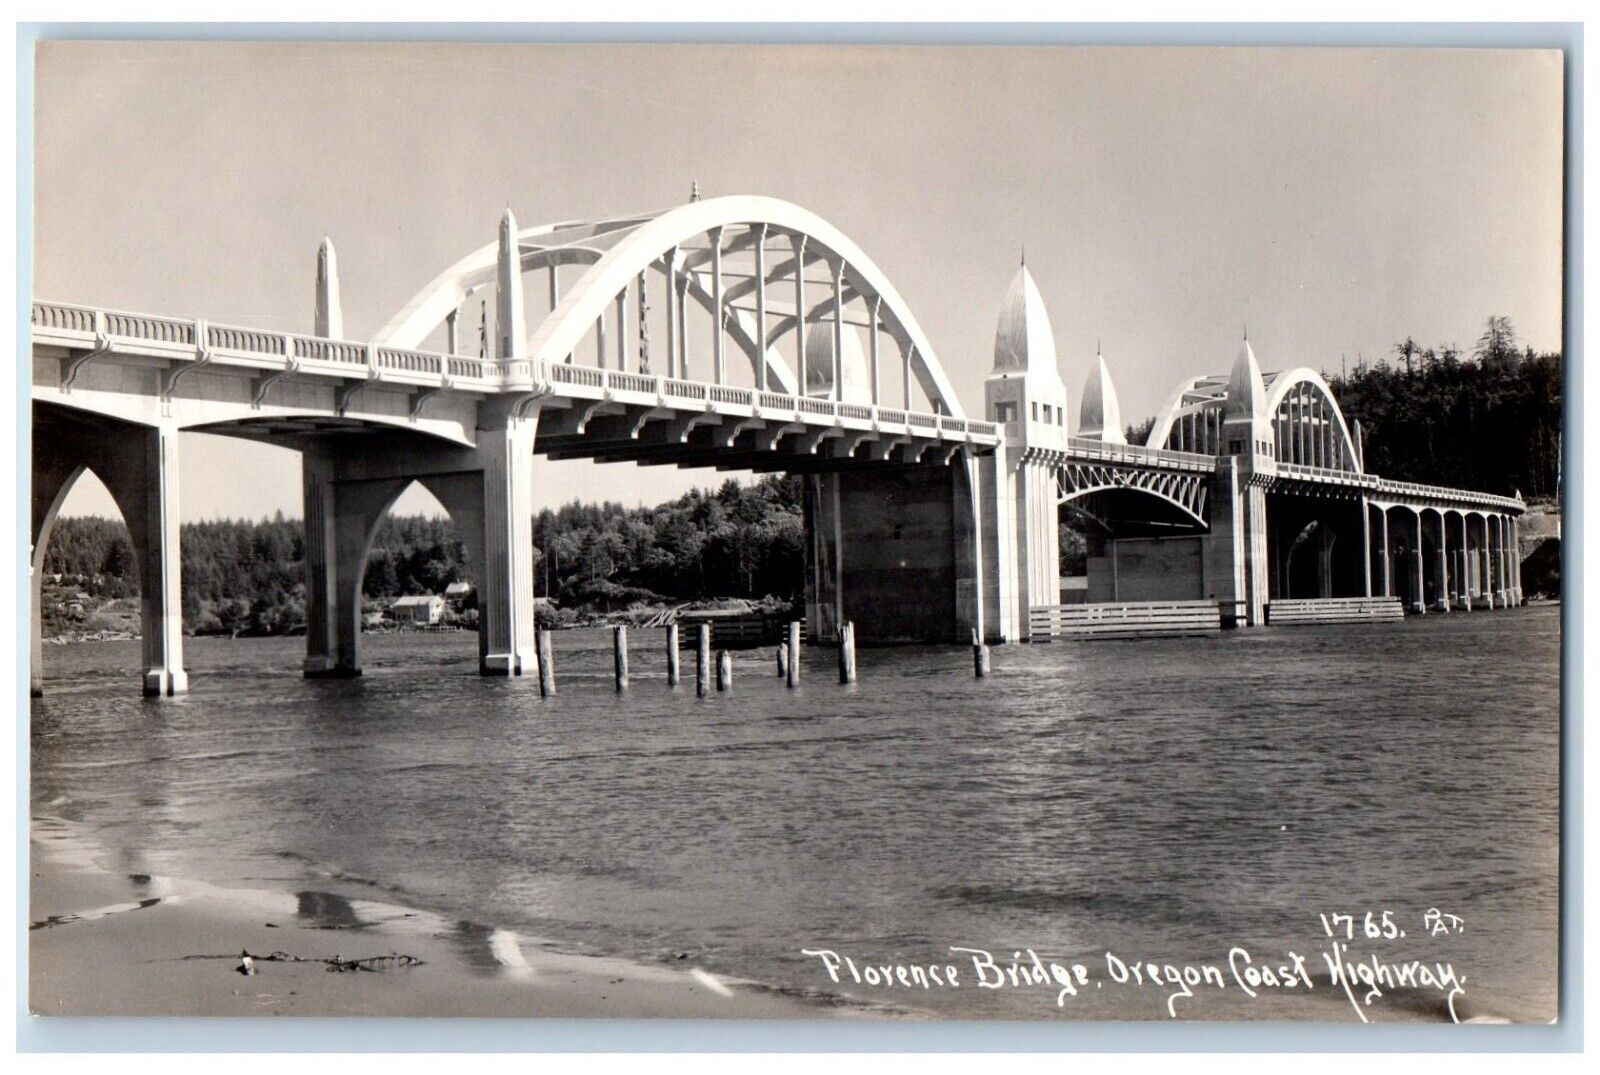 Patterson California CA Postcard RPPC Photo Florence Bridge Oregon Coast Highway